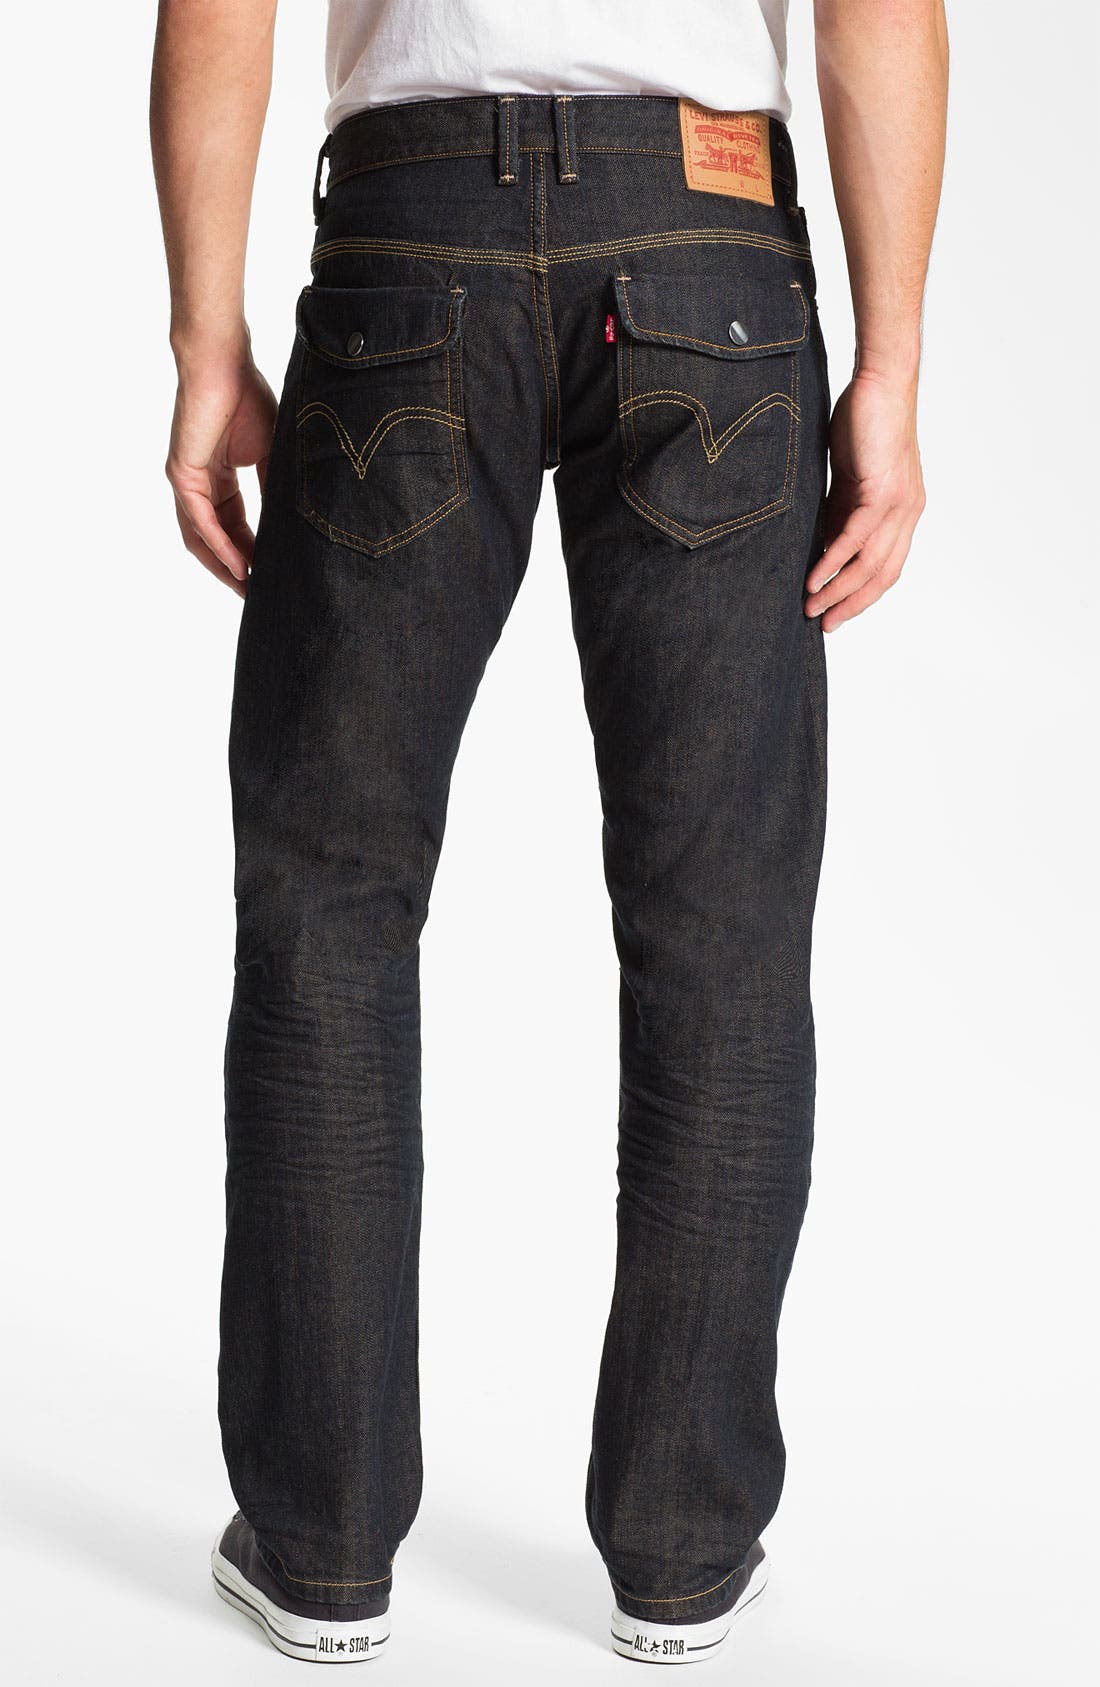 levi's back flap pocket jeans